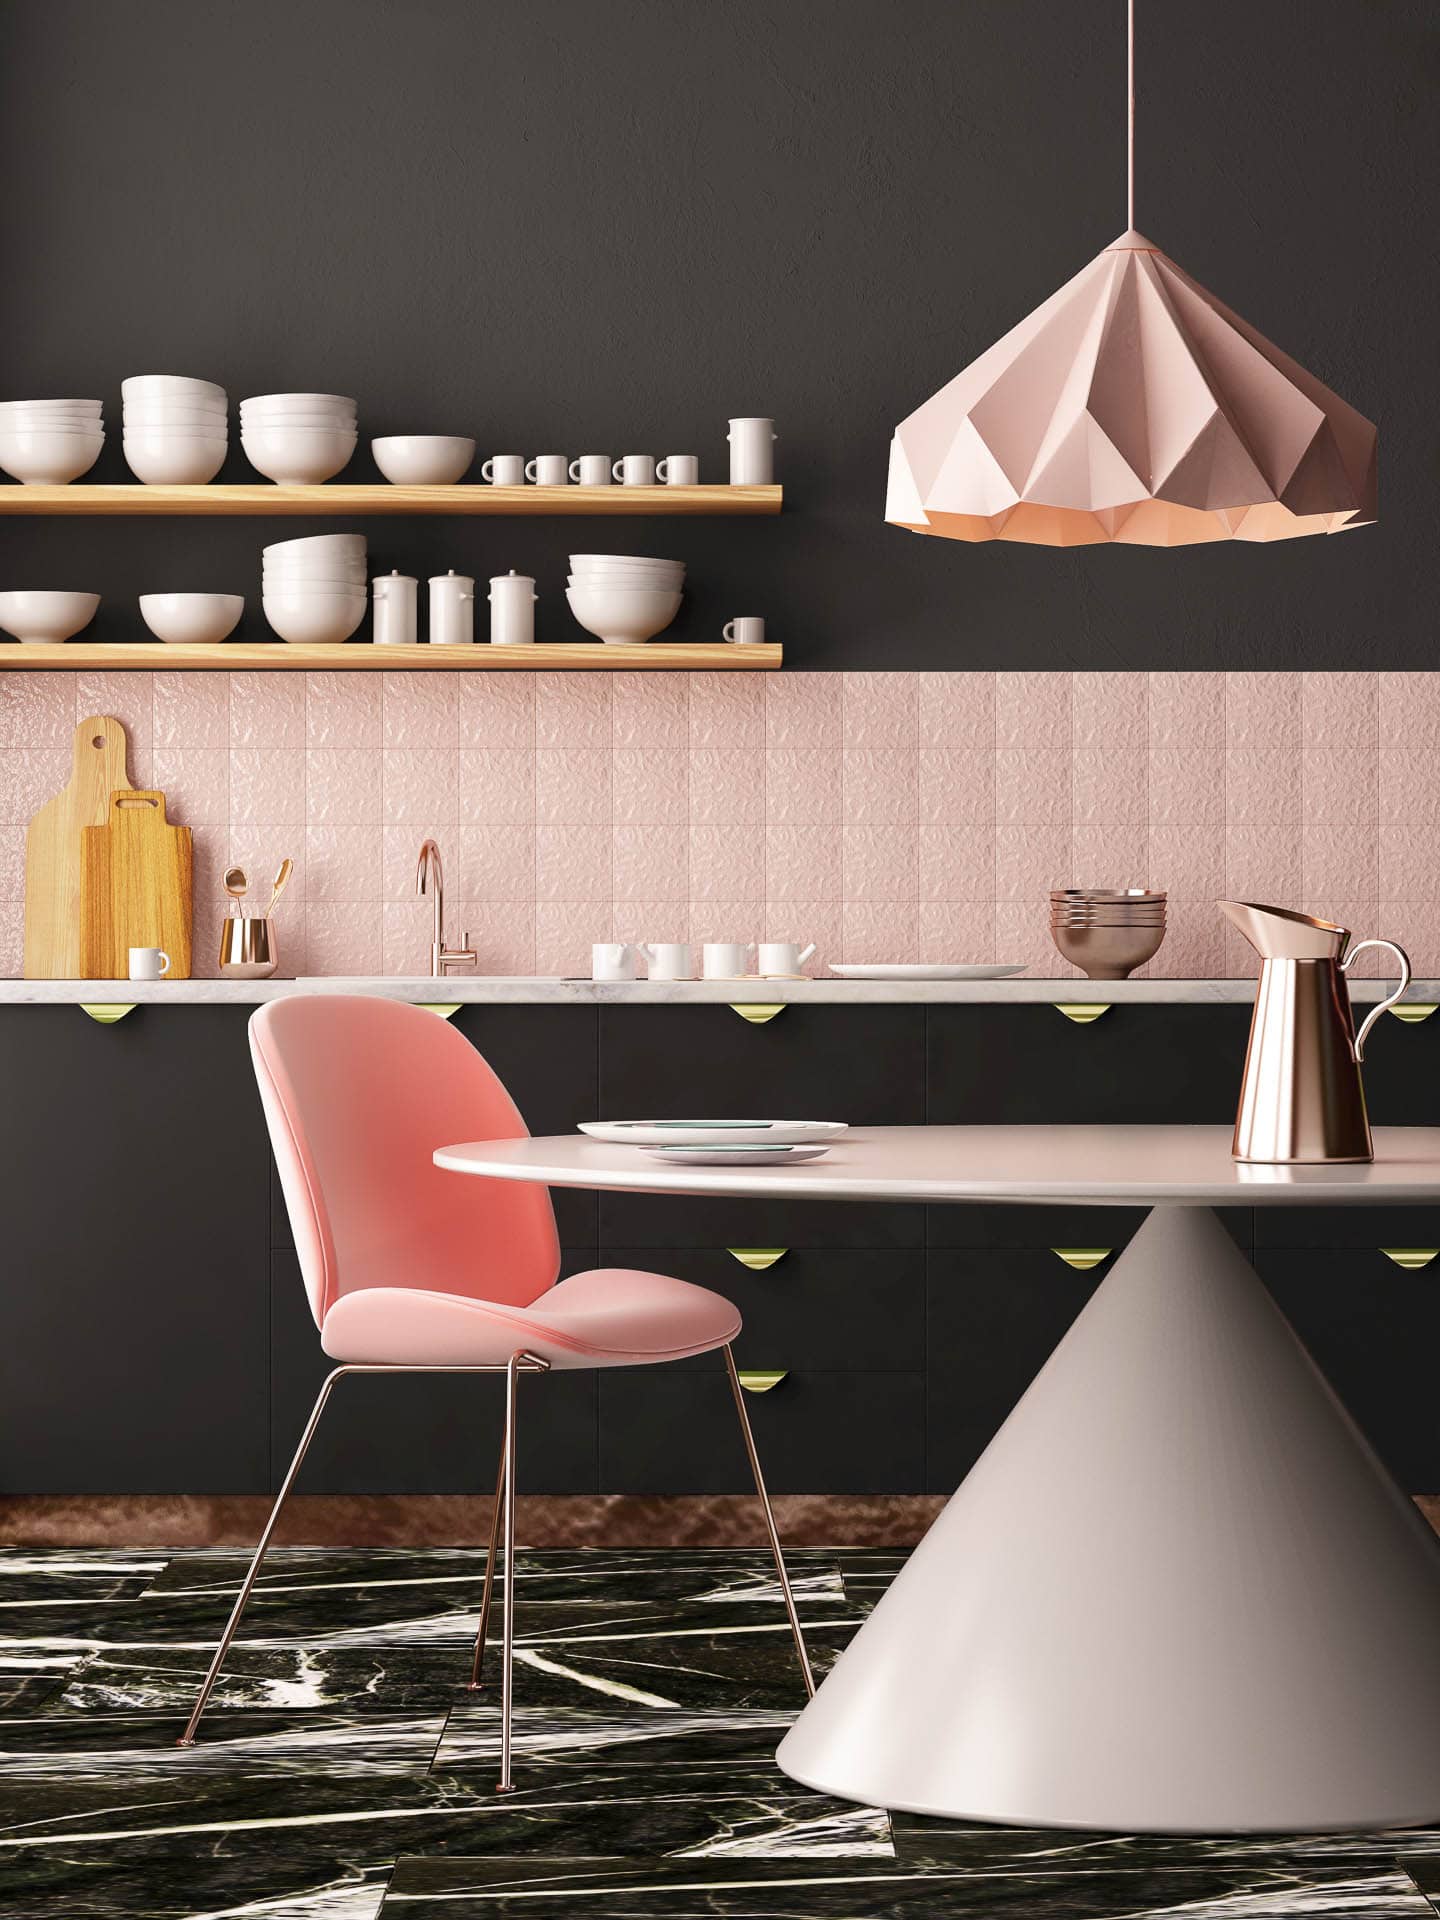 Modern kitchen with black walls, wood open shelves, pink tile backsplash and a pink pendant light fixture